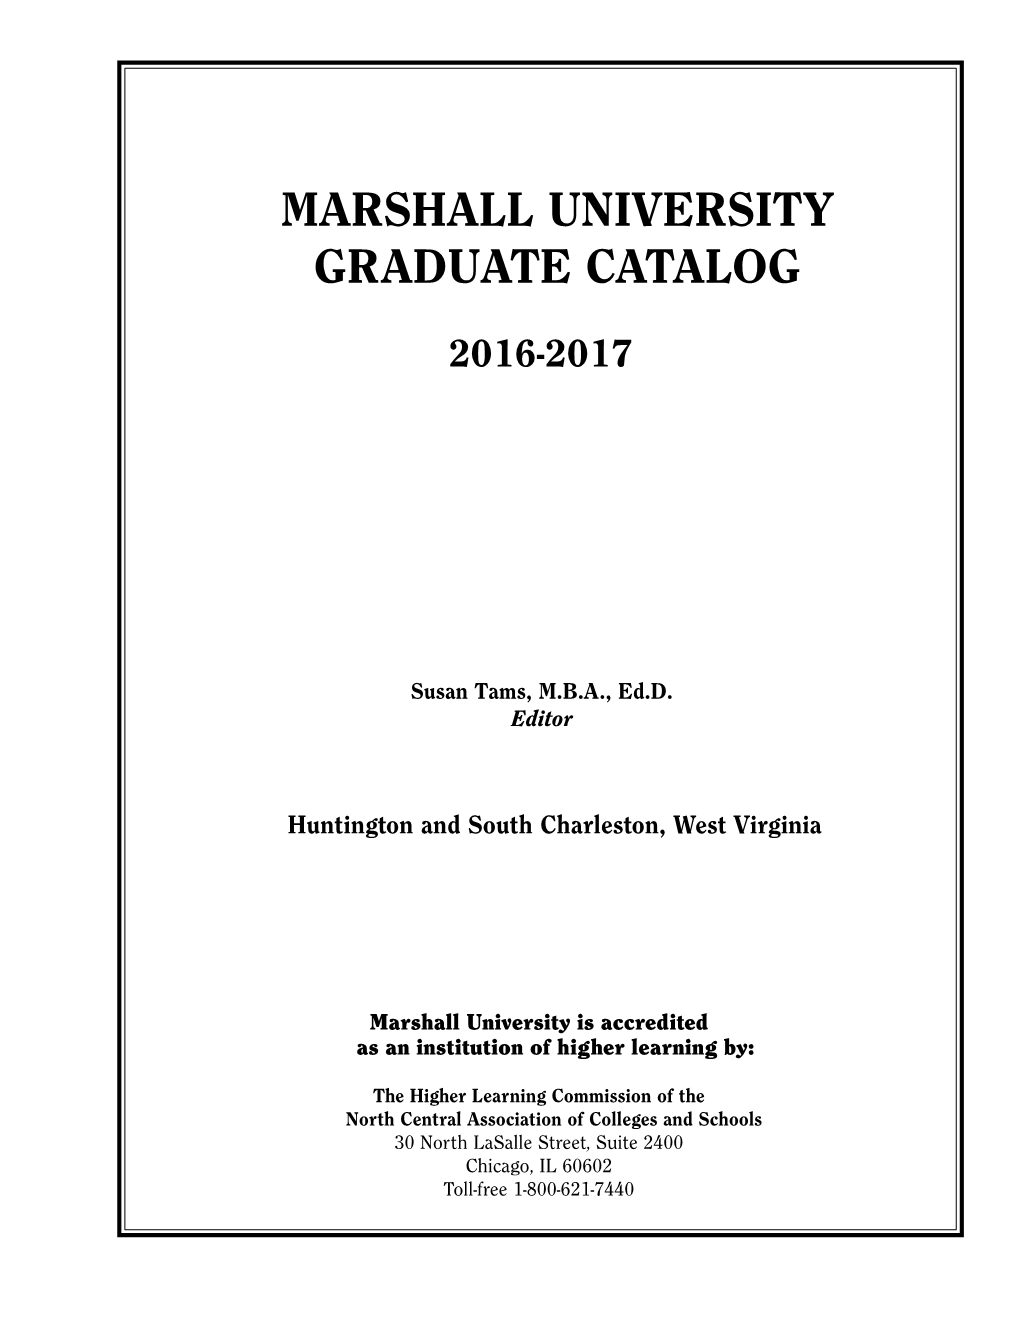 Marshall University Graduate Catalog